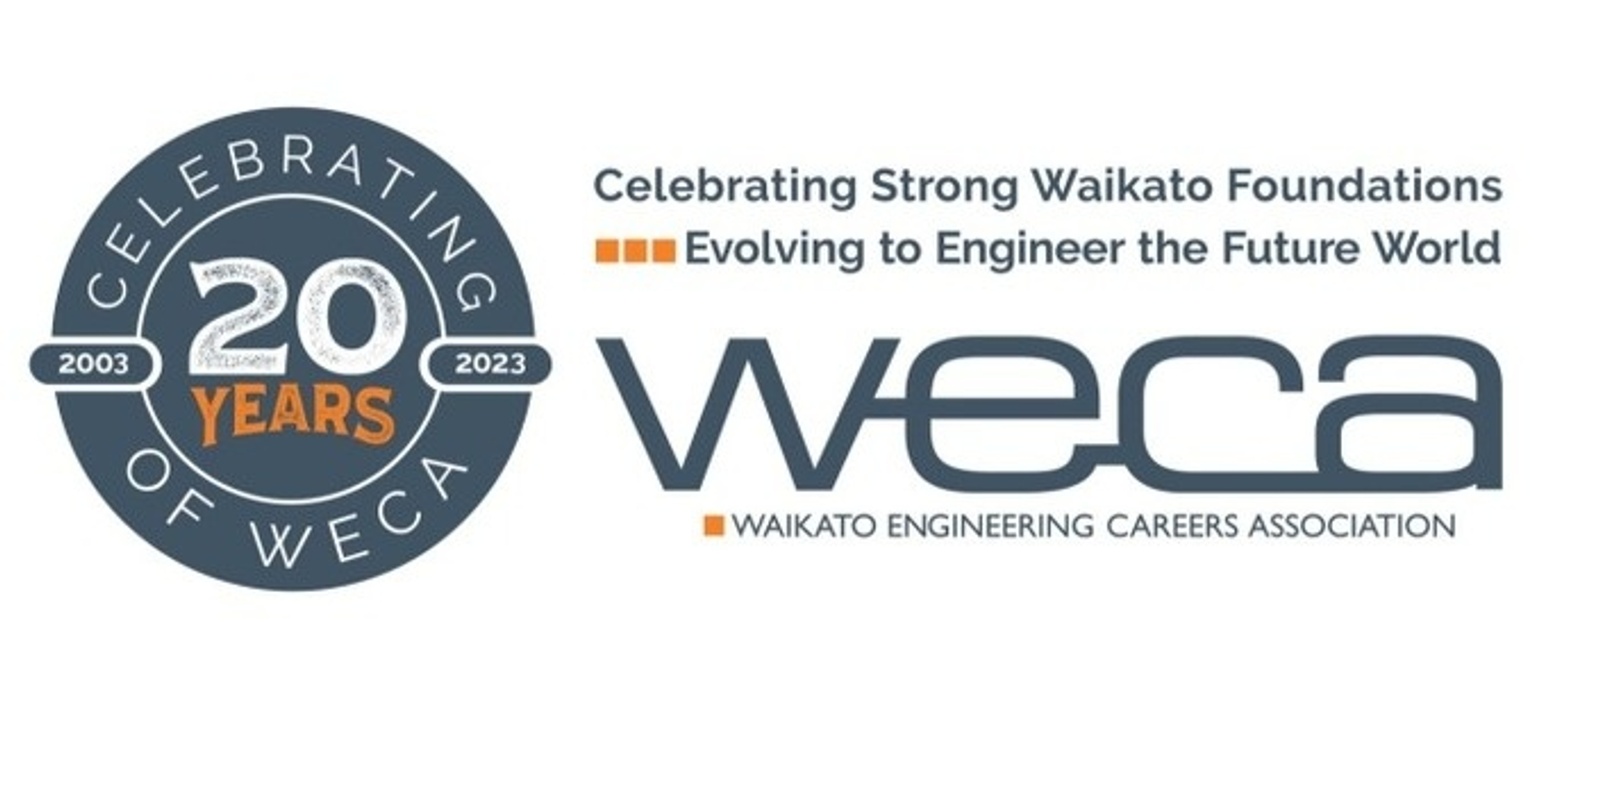 Banner image for WECA 20th Anniversary Celebration